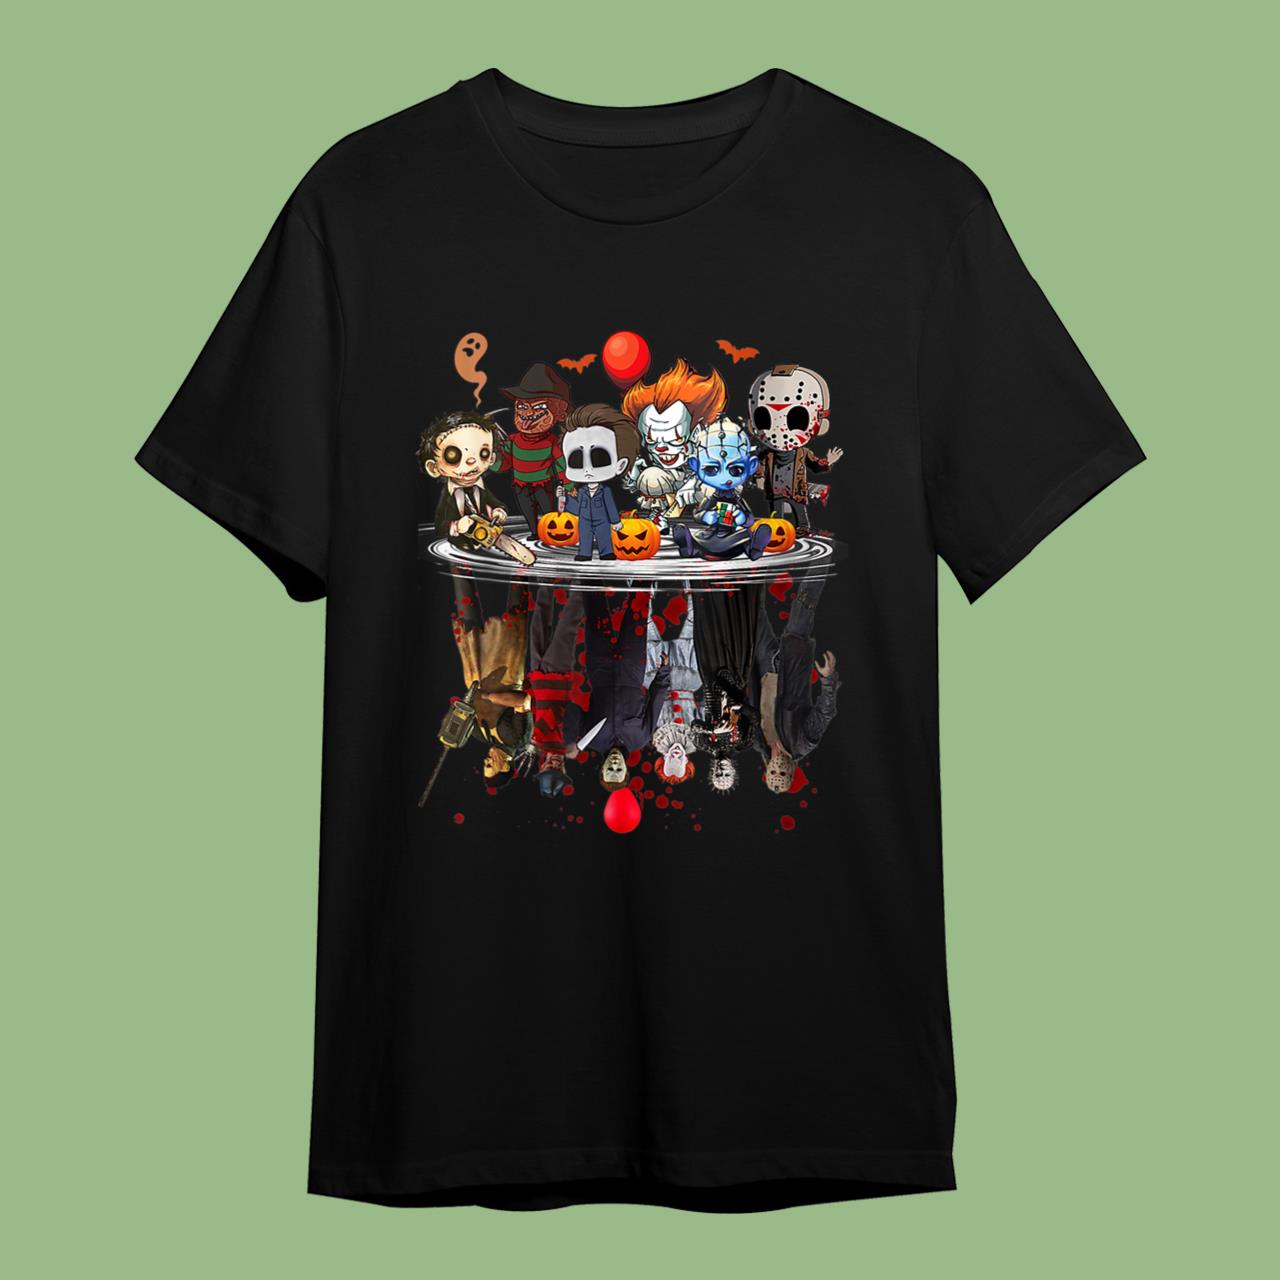 Skitongift Horror Movies Character Halloween Clothes Costume Gift T-Shirt